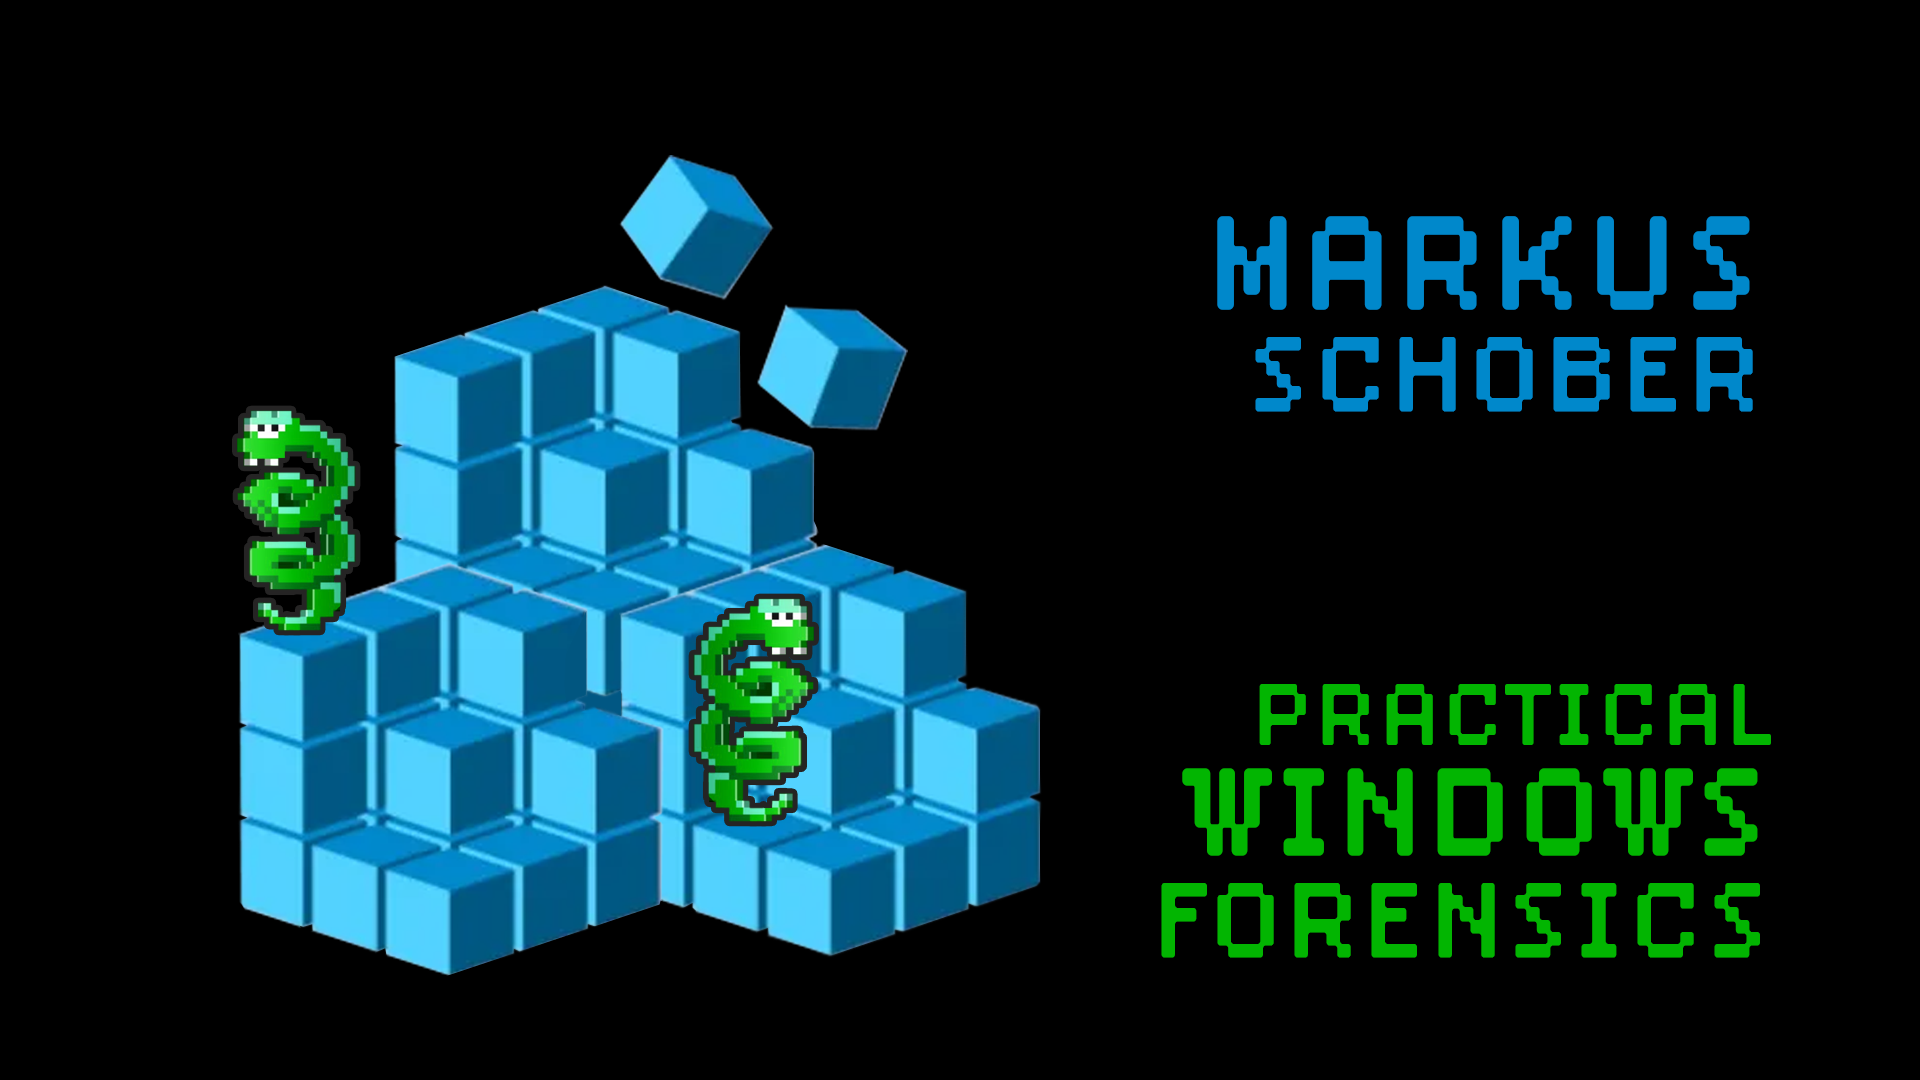 Practical Windows Forensics w/ Markus Schober